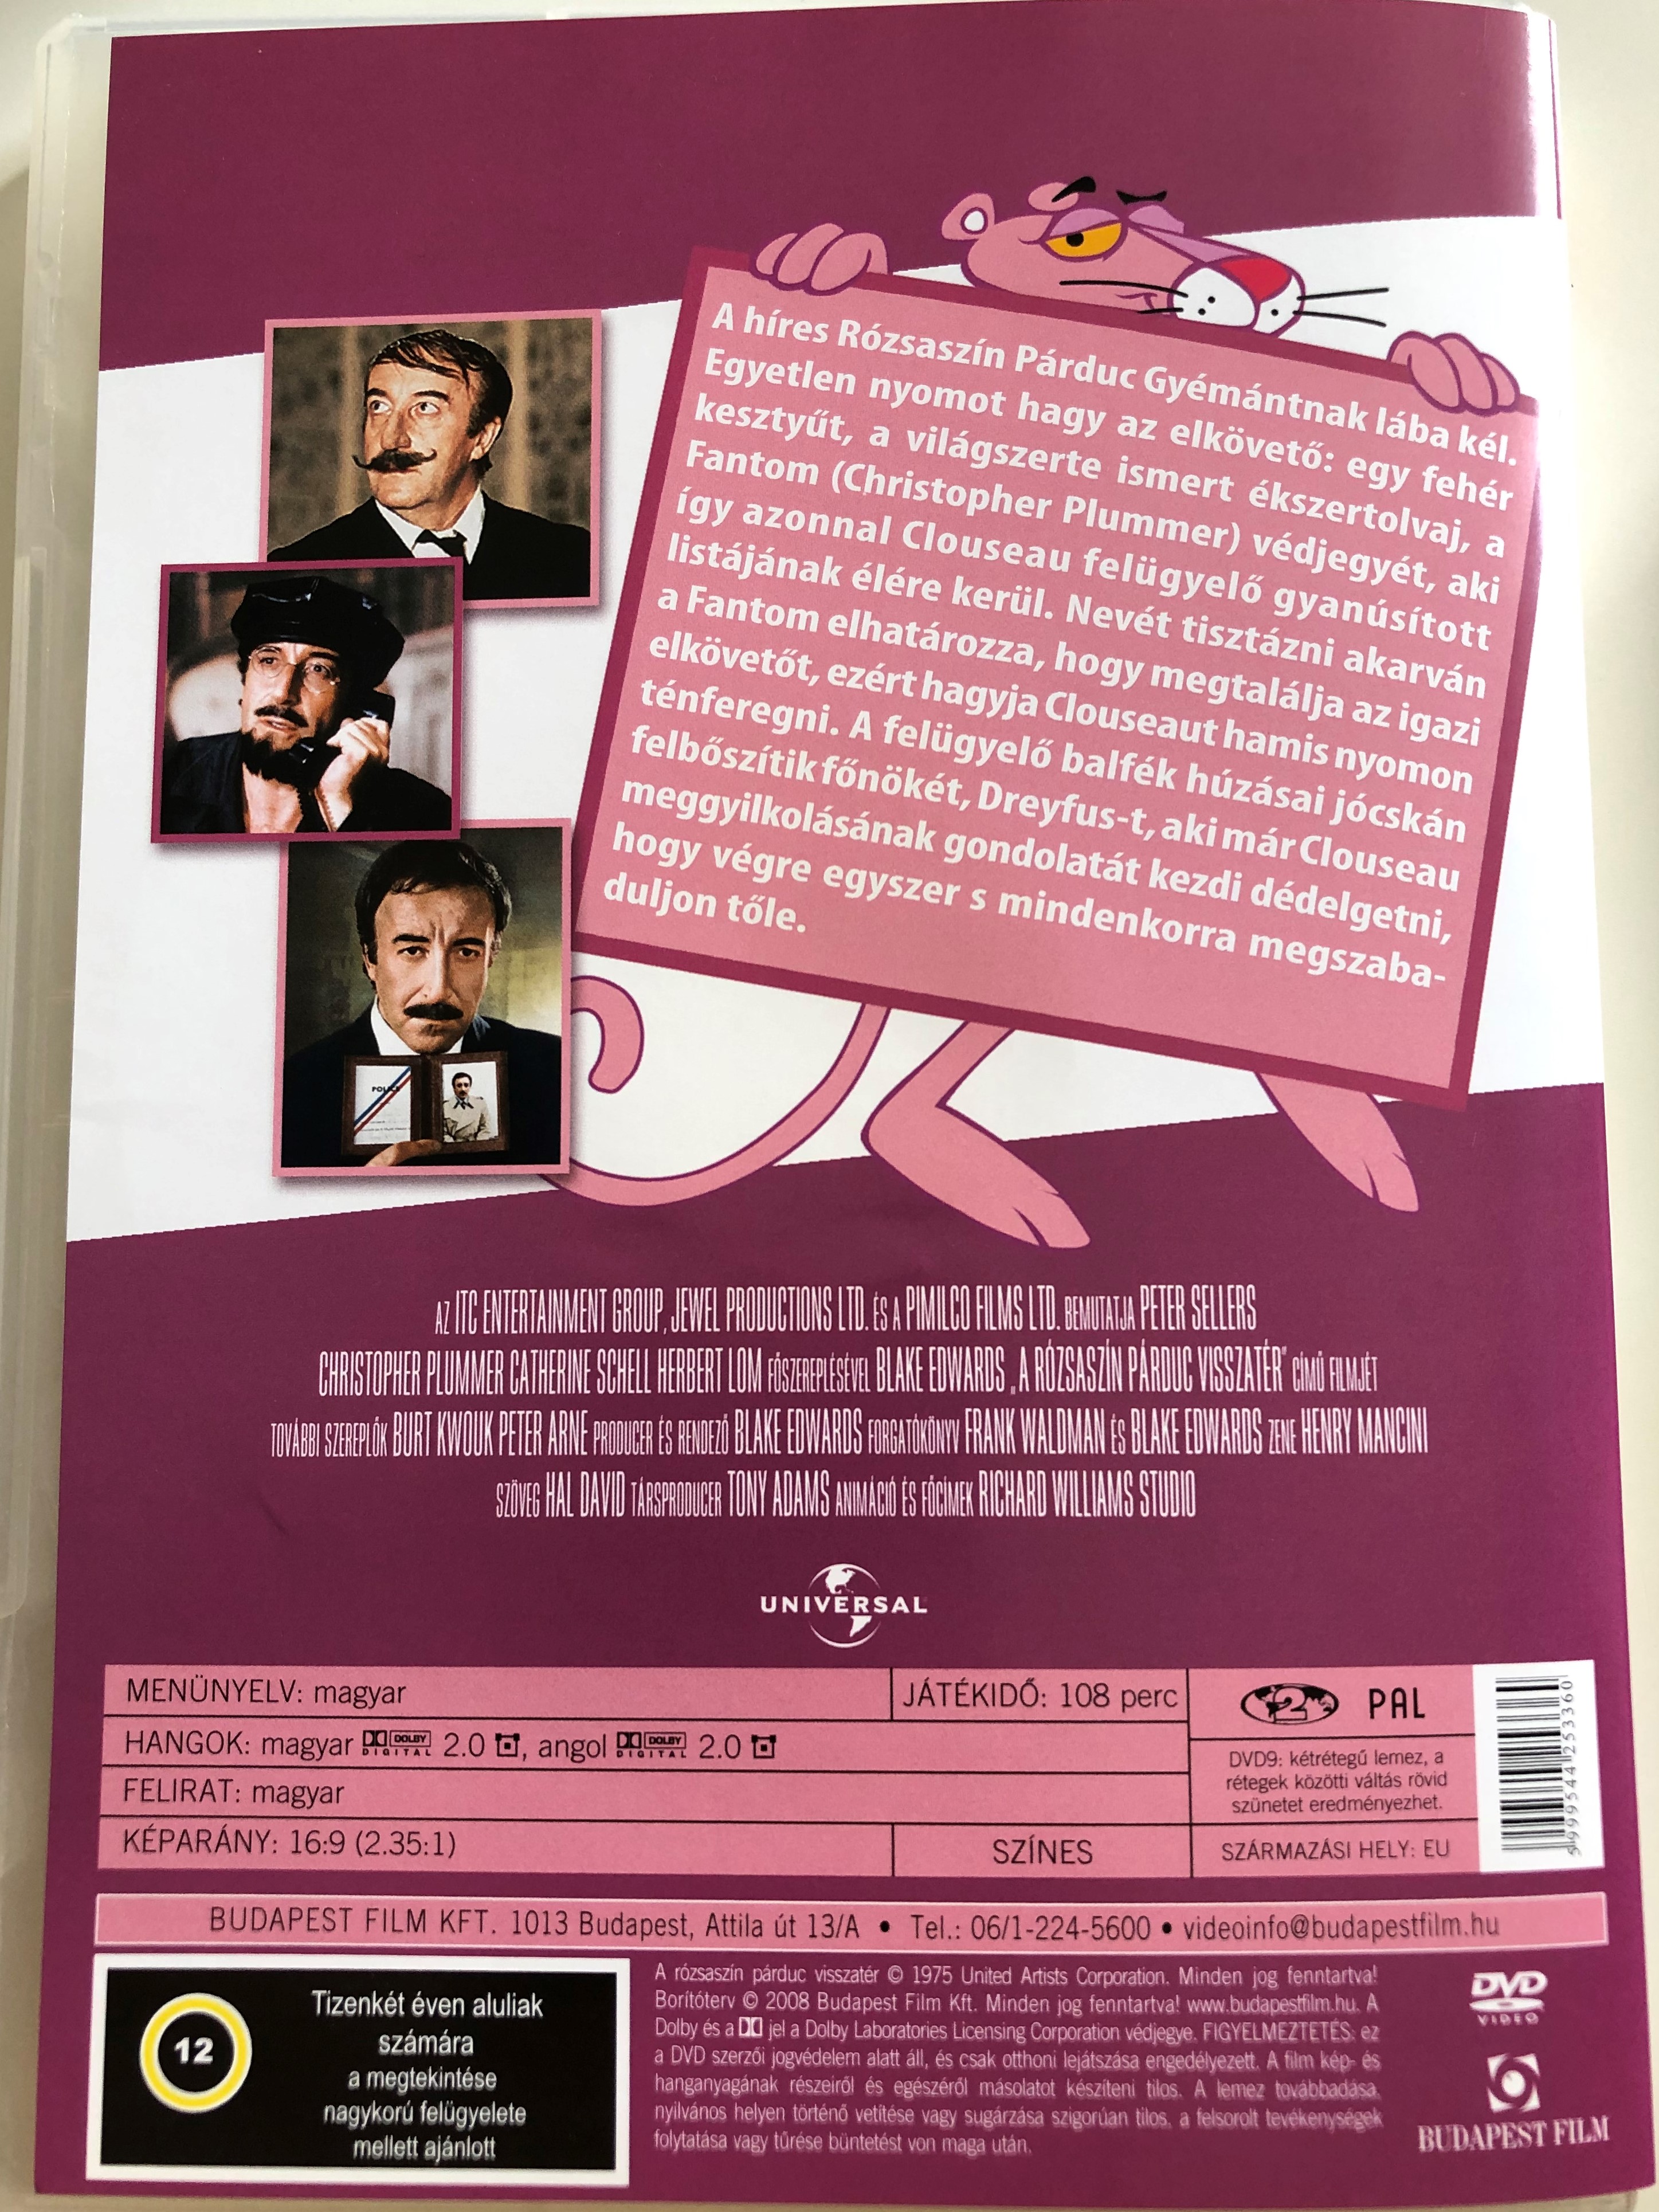 The Return of the Pink Panther DVD 1975 A rózsaszín párduc visszatér /  Directed by Blake Edwards / Starring: Peter Sellers, Christopher Plummer,  Catherine Schell, Herbert Lom - bibleinmylanguage